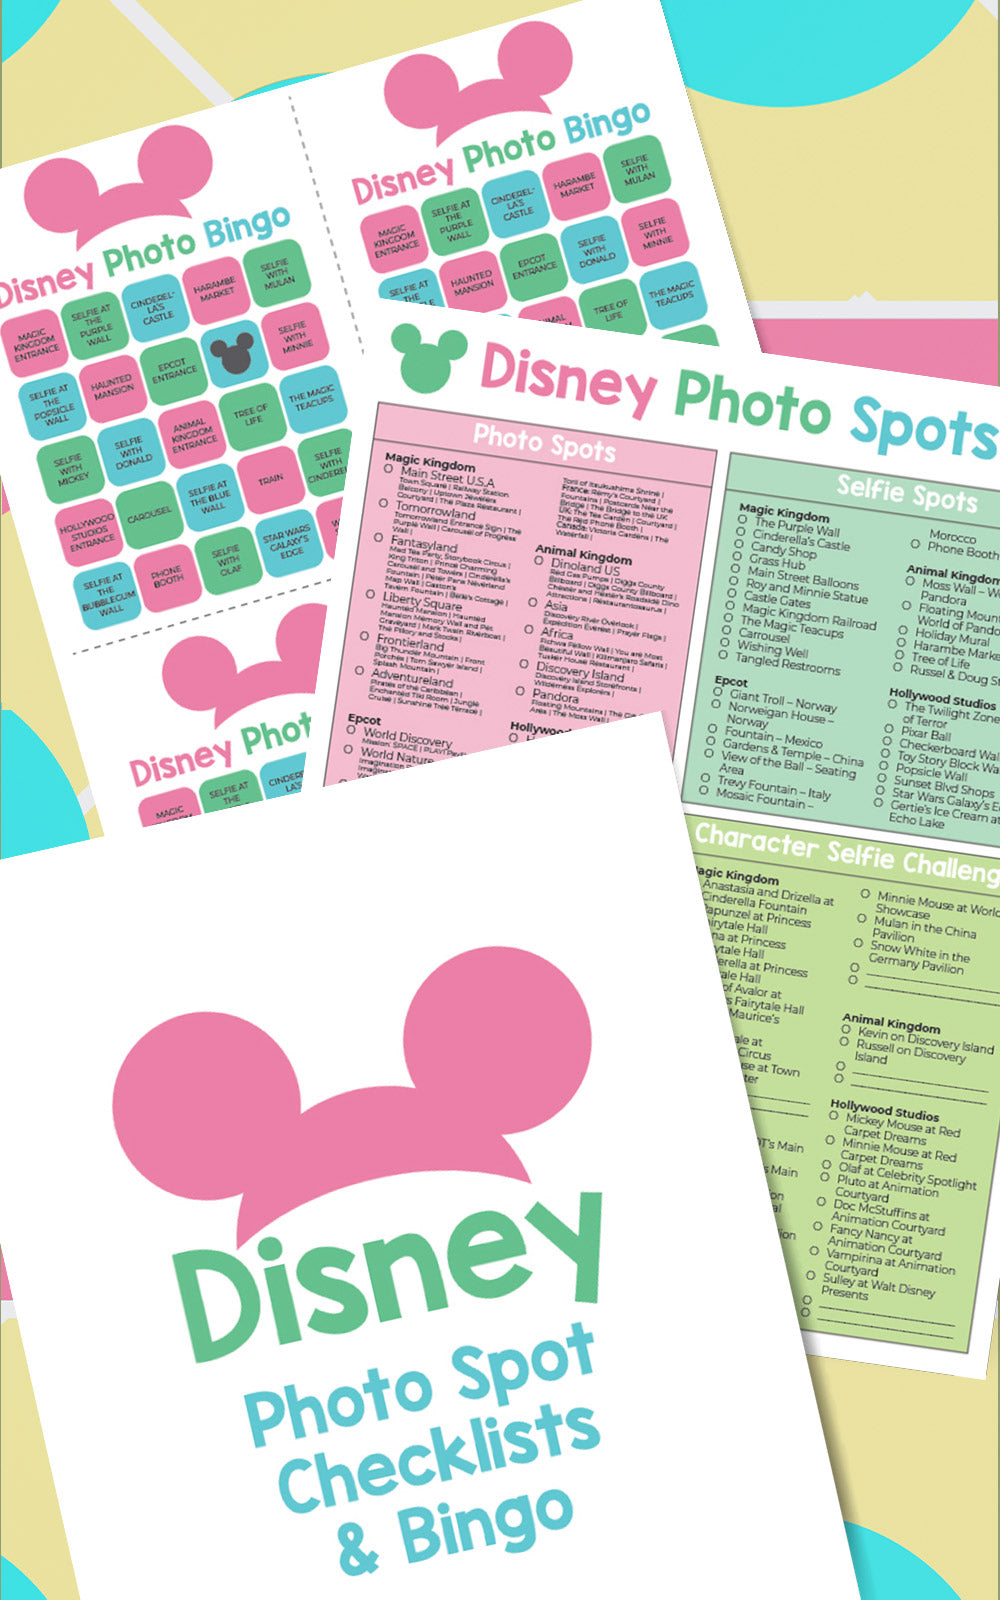 Disney Photo Spots Checklist and BINGO!